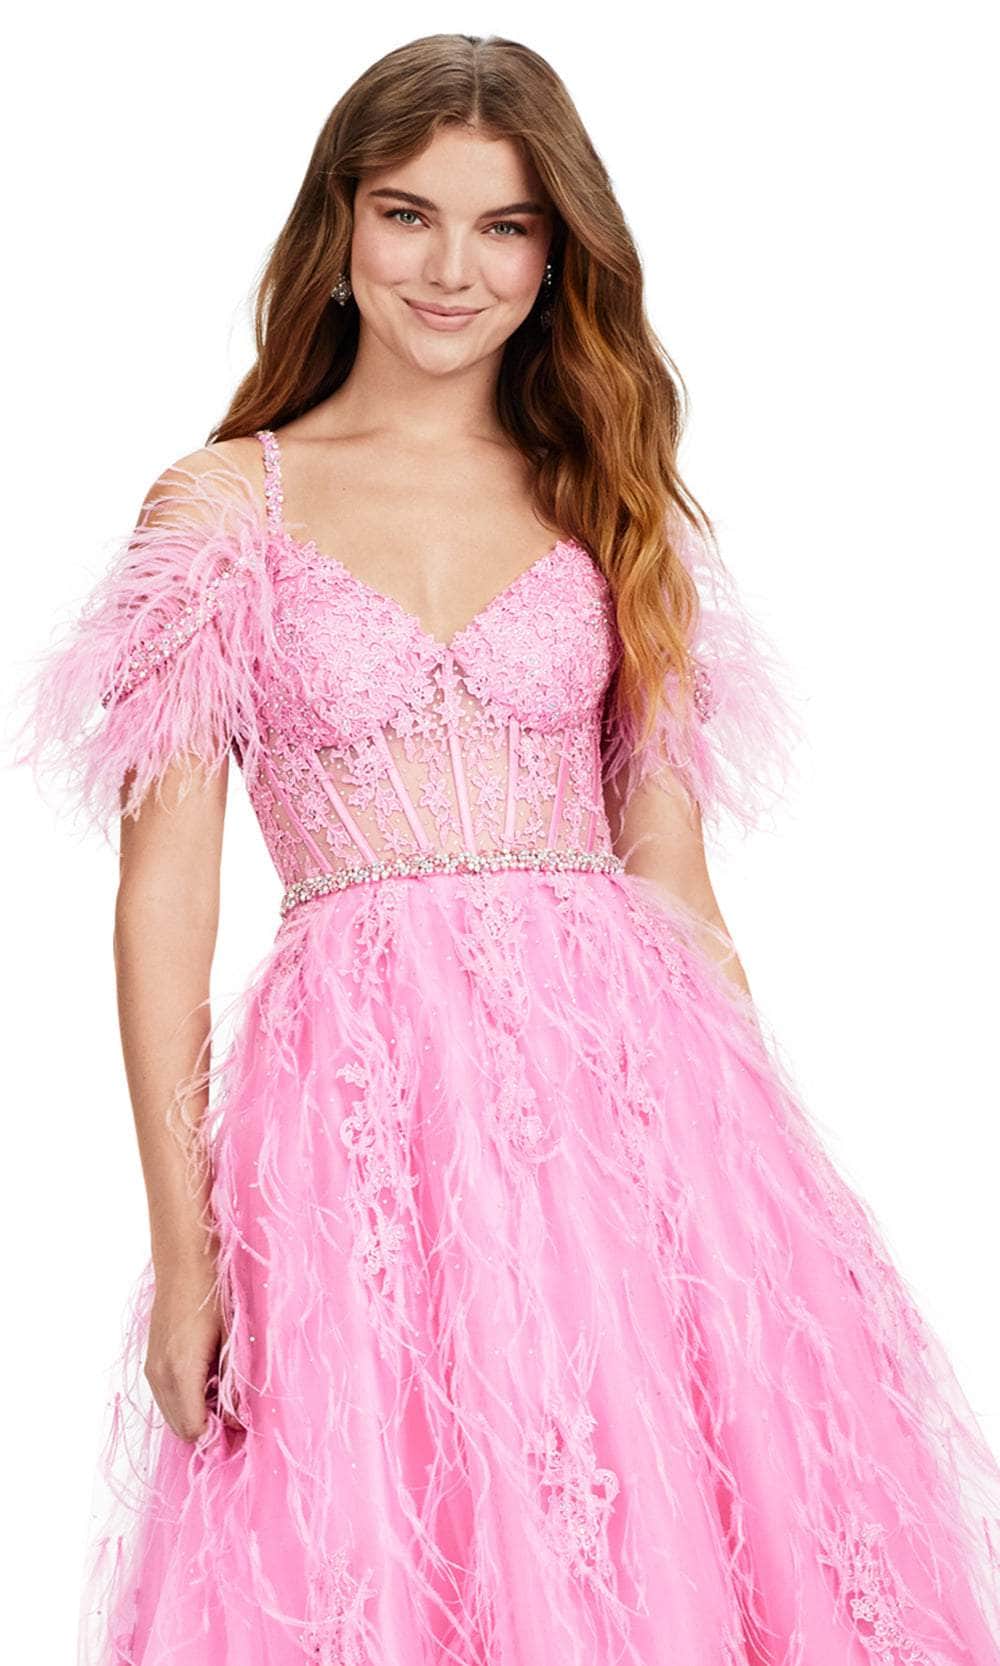 Ashley Lauren 11447 - Beaded Lace Corset Evening Gown 00 / 